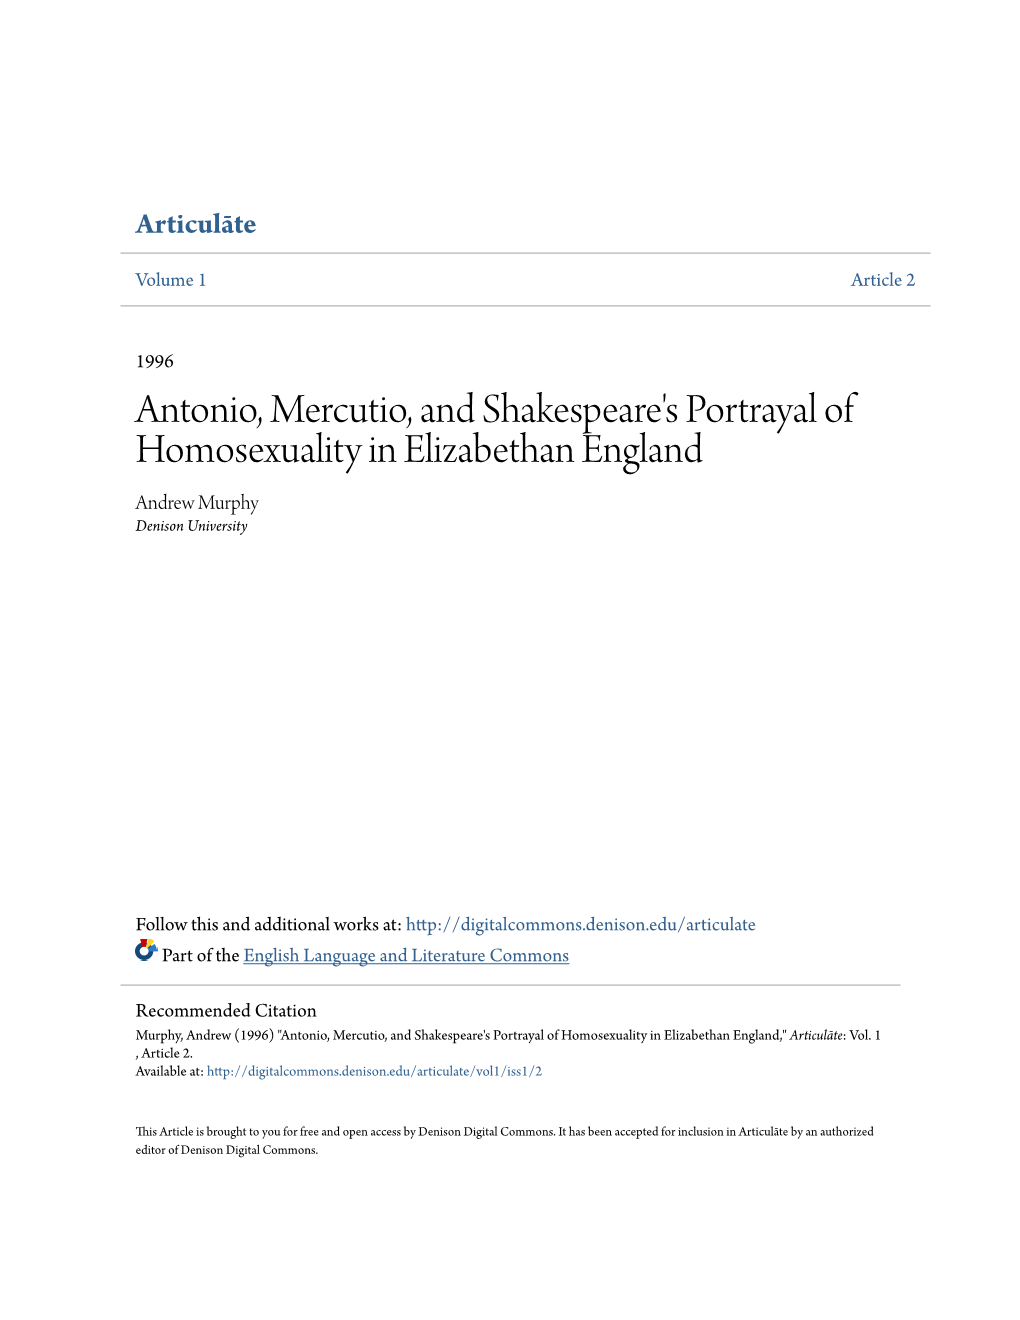 Antonio, Mercutio, and Shakespeare's Portrayal of Homosexuality in Elizabethan England Andrew Murphy Denison University